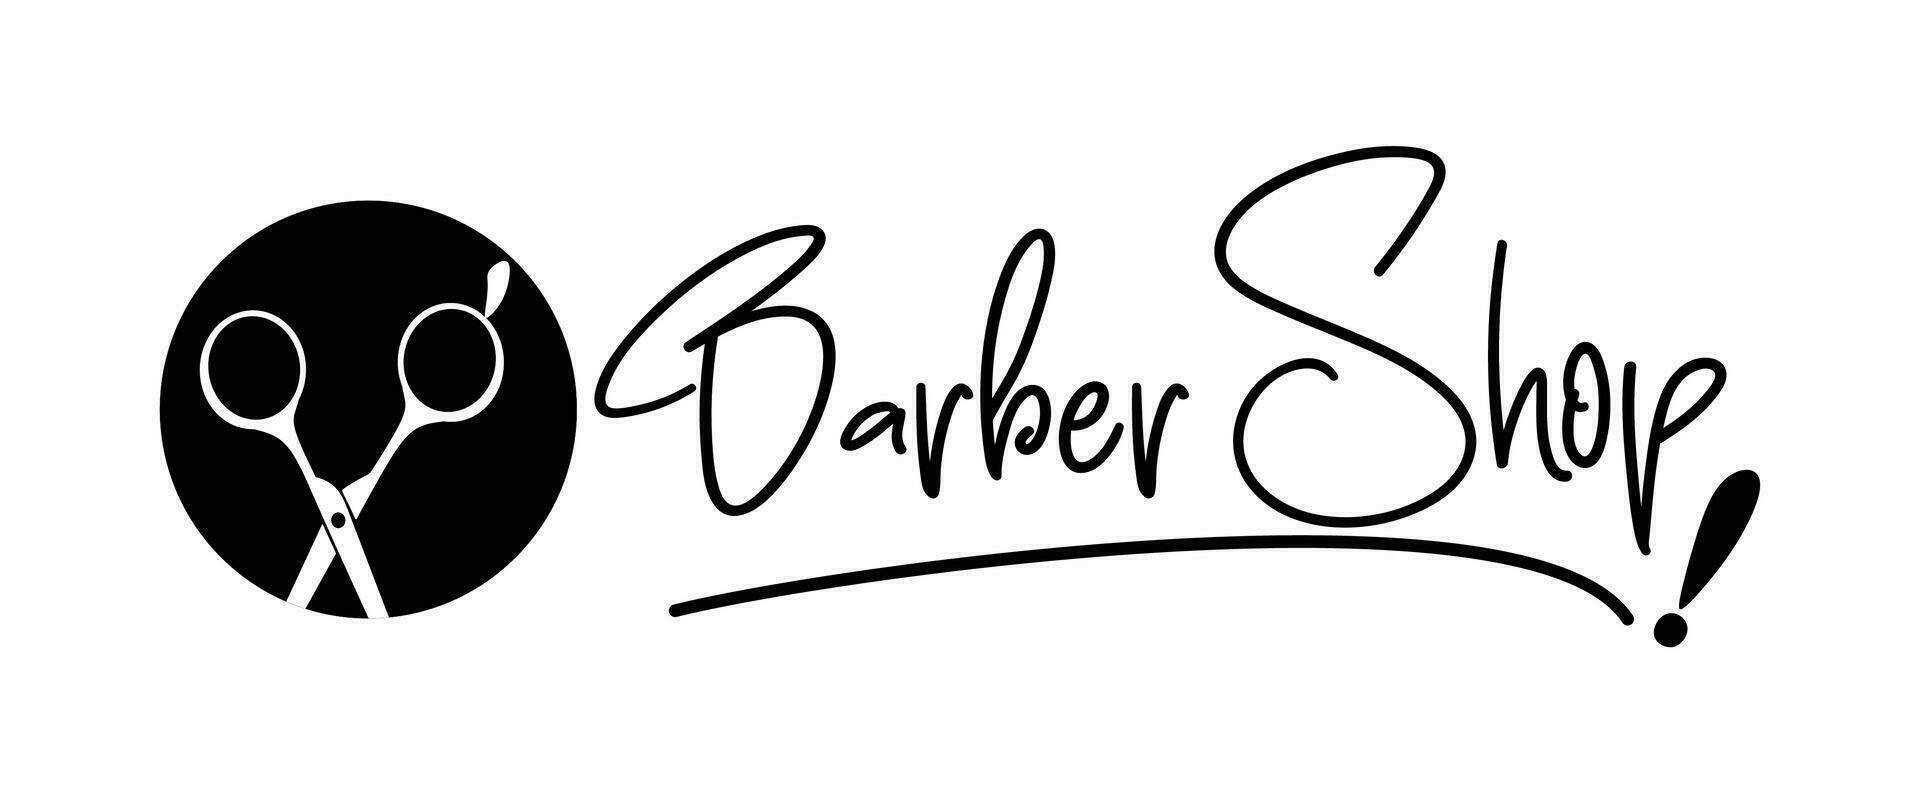 Vector vector barber shop business card and men's salon or barber shop logo black and white